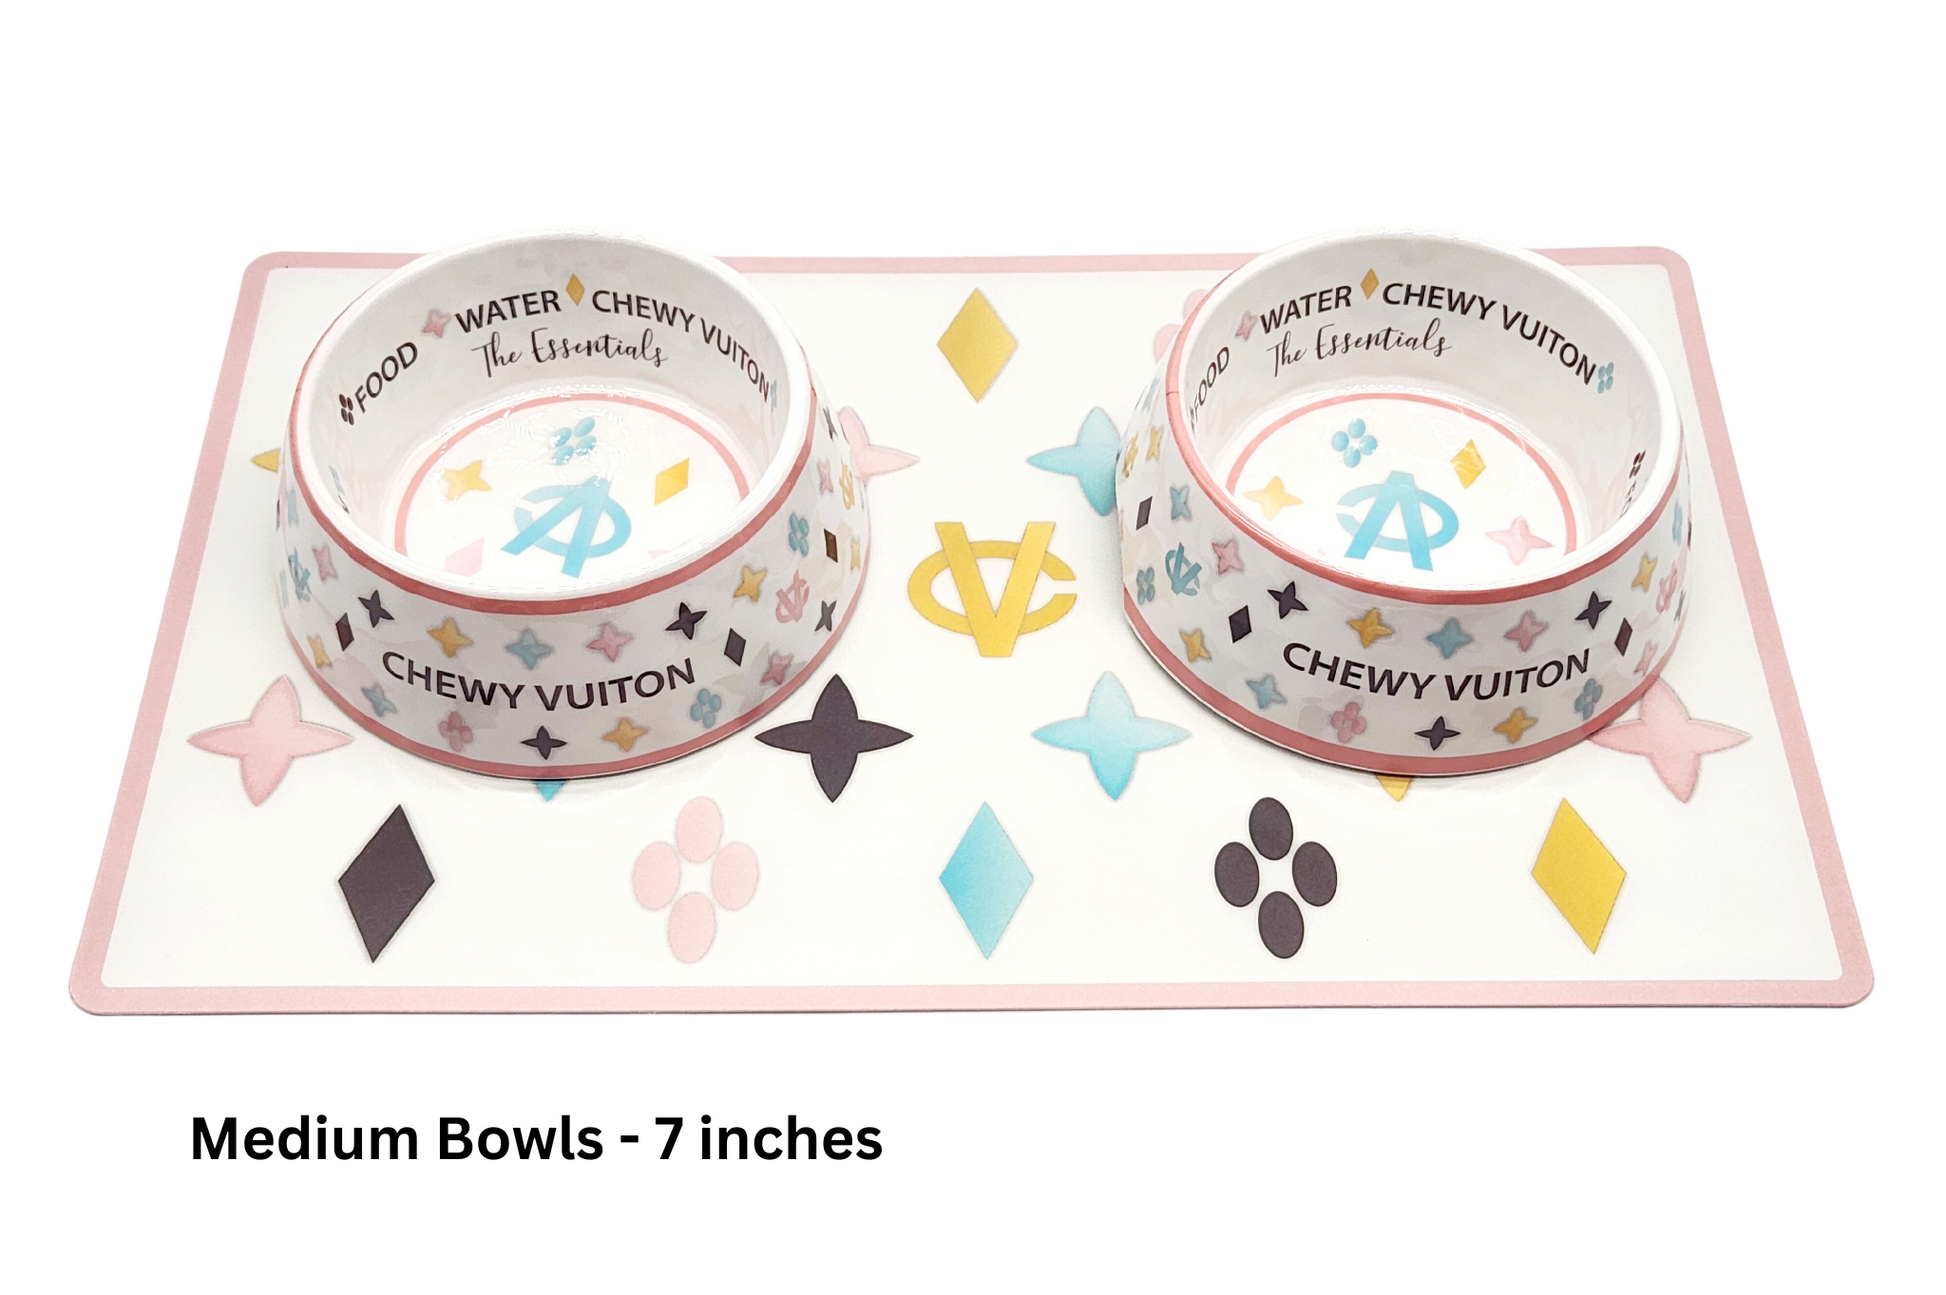 White Chewy Vuiton Dog Bowl Set